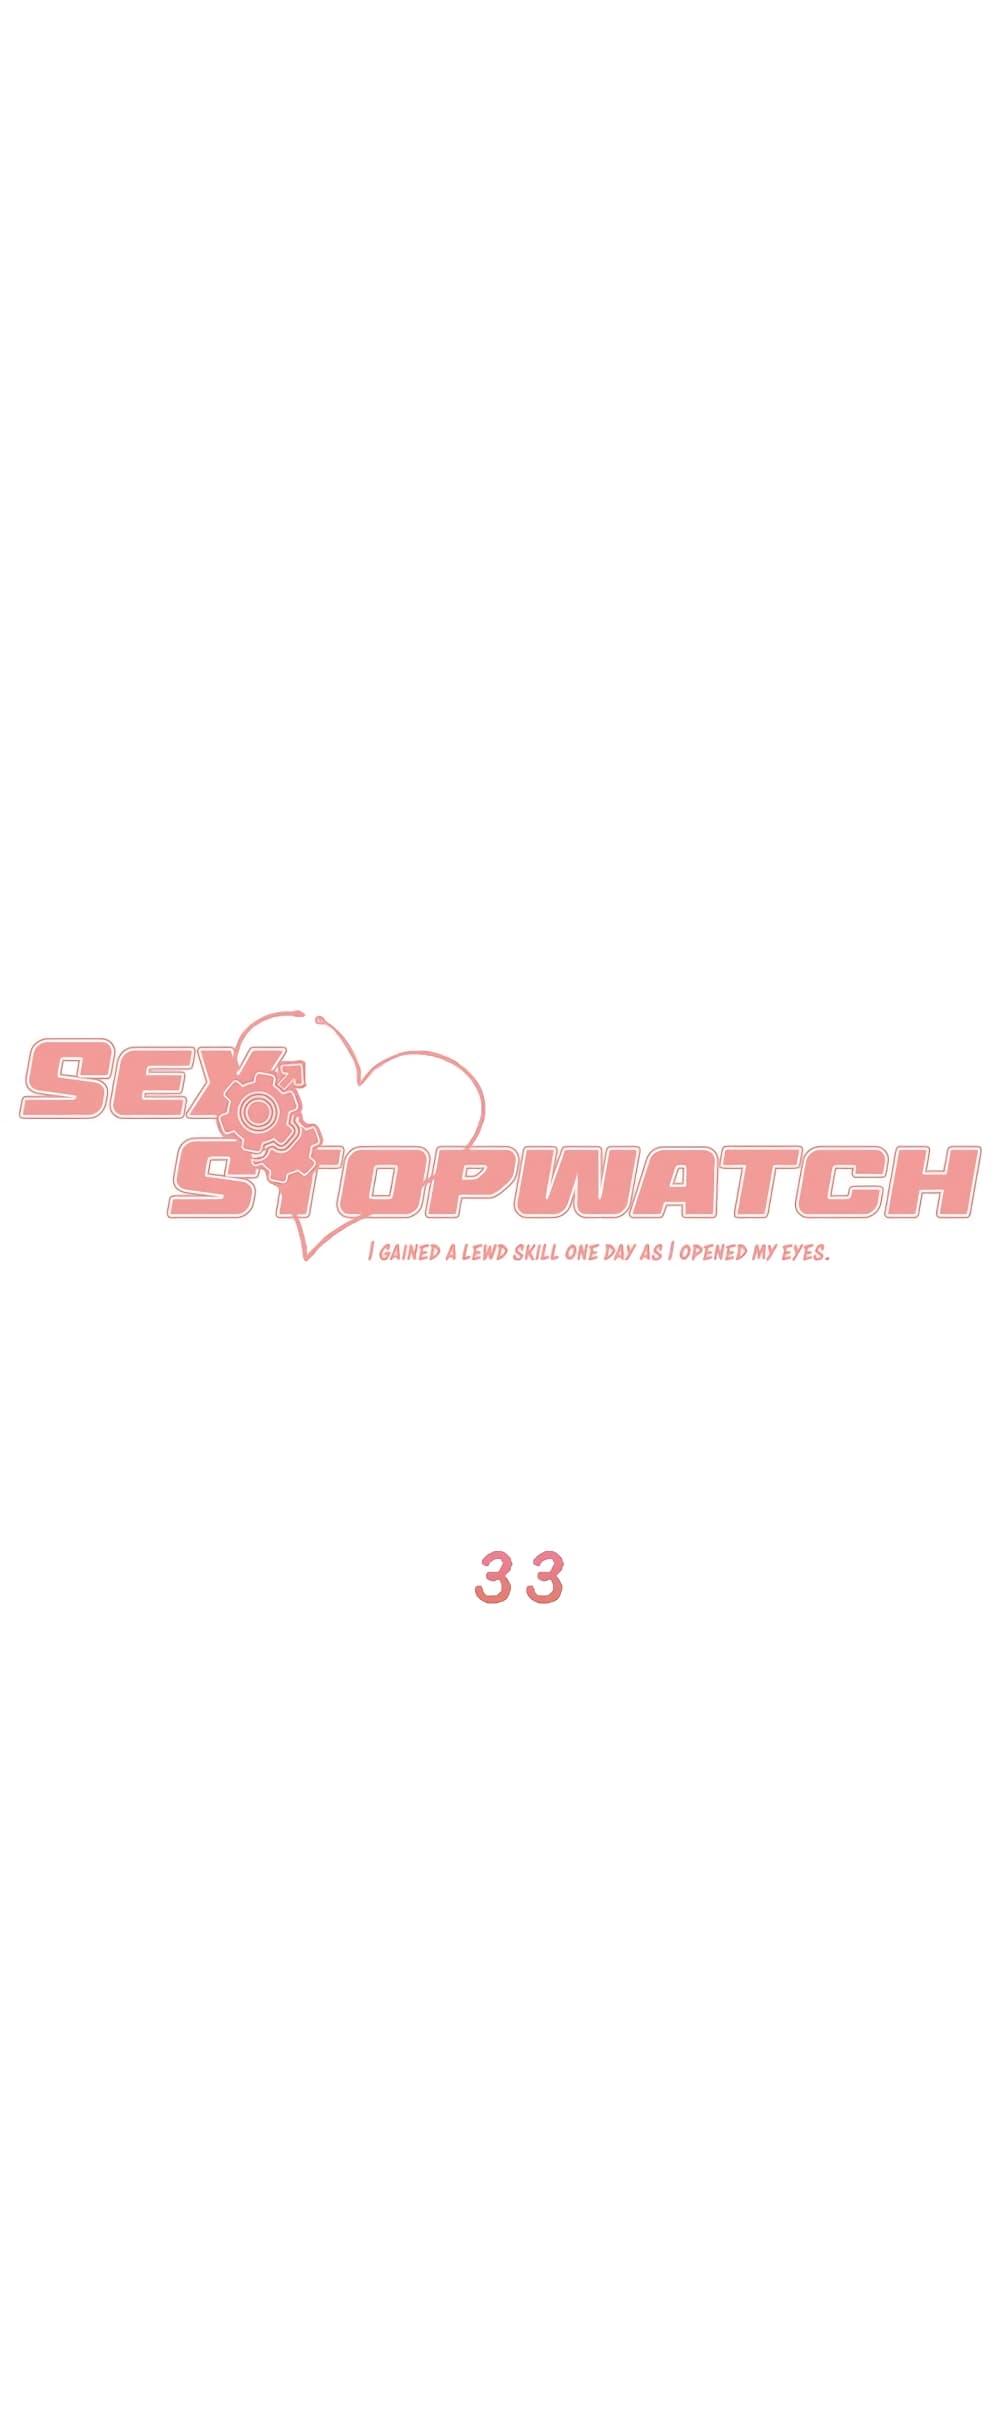 Sex-stop Watch 33-33